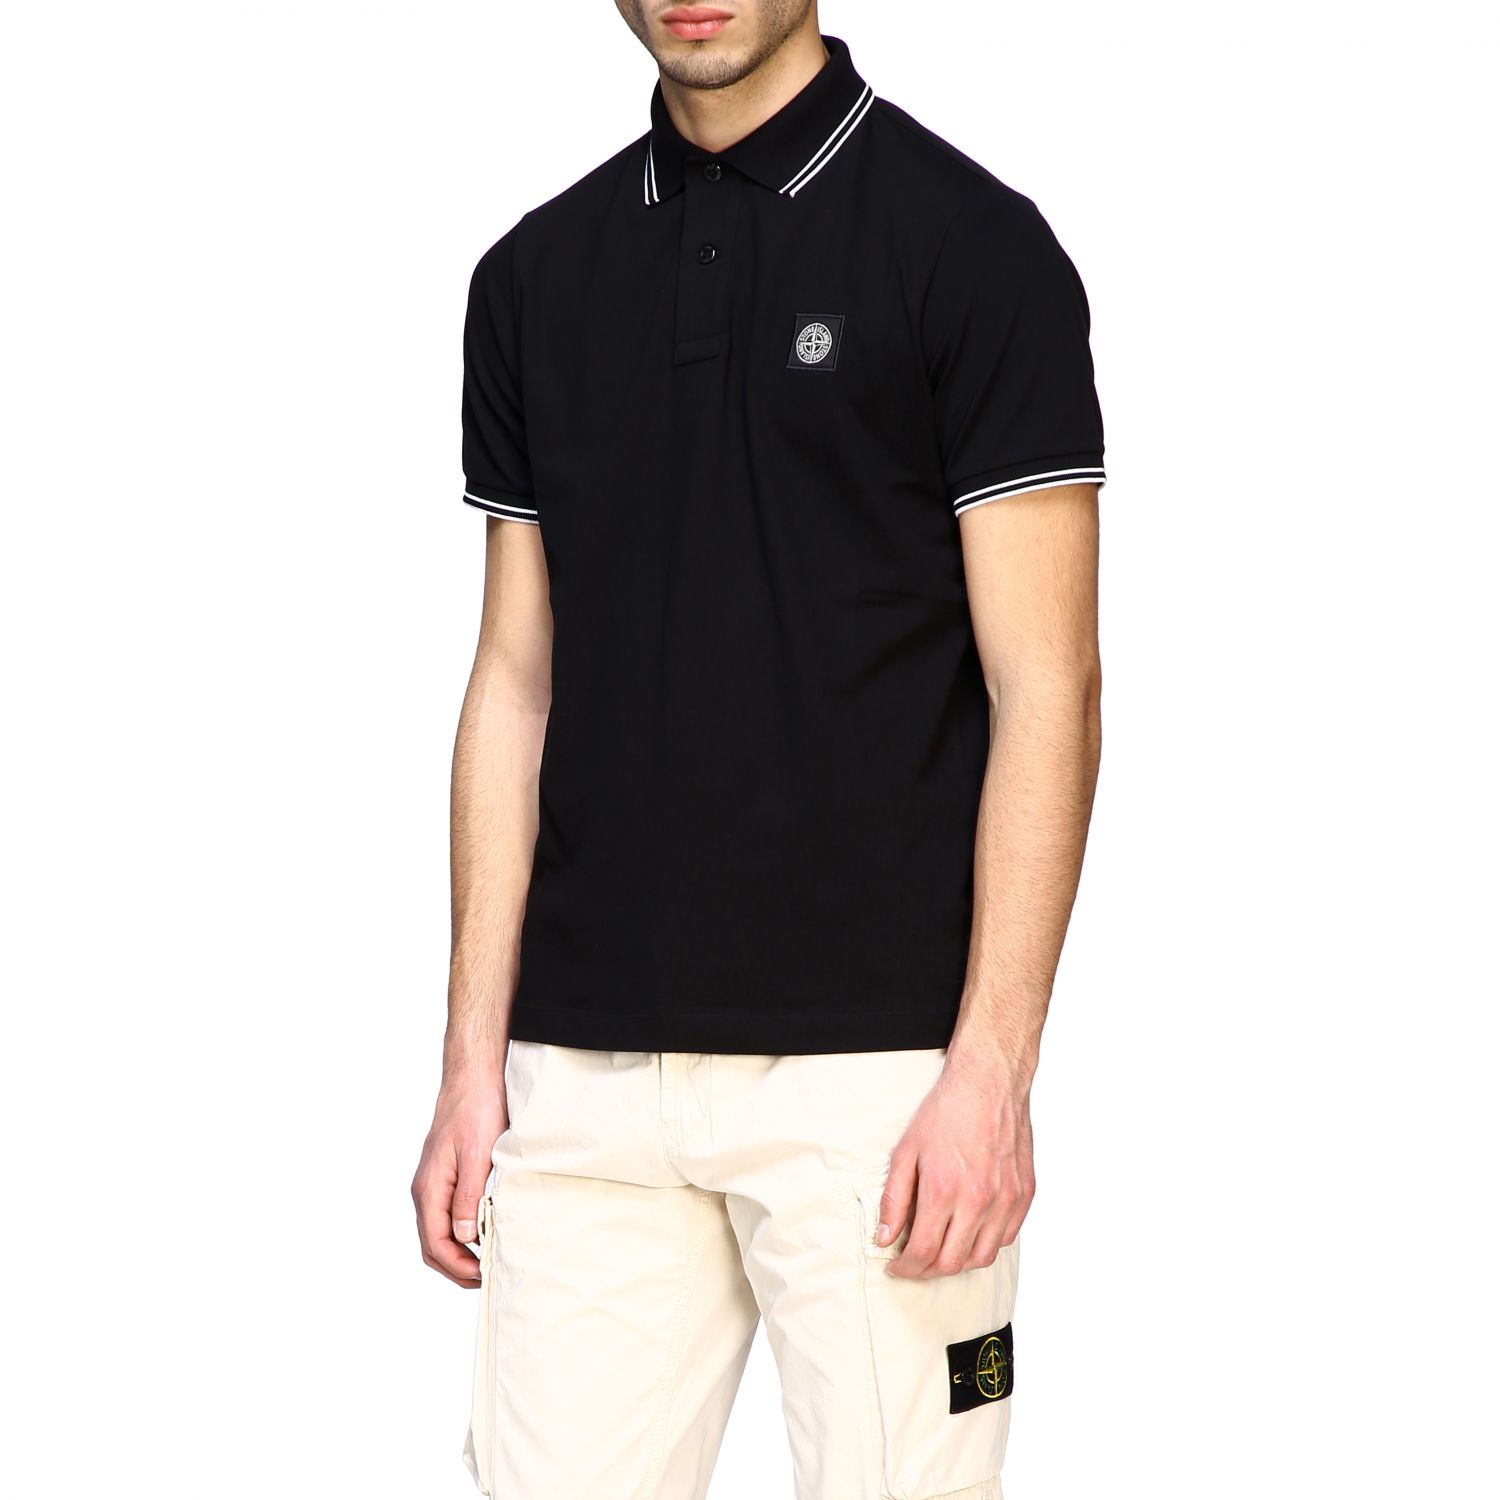 STONE ISLAND: short-sleeved polo shirt with logo - Black | Polo Shirt ...